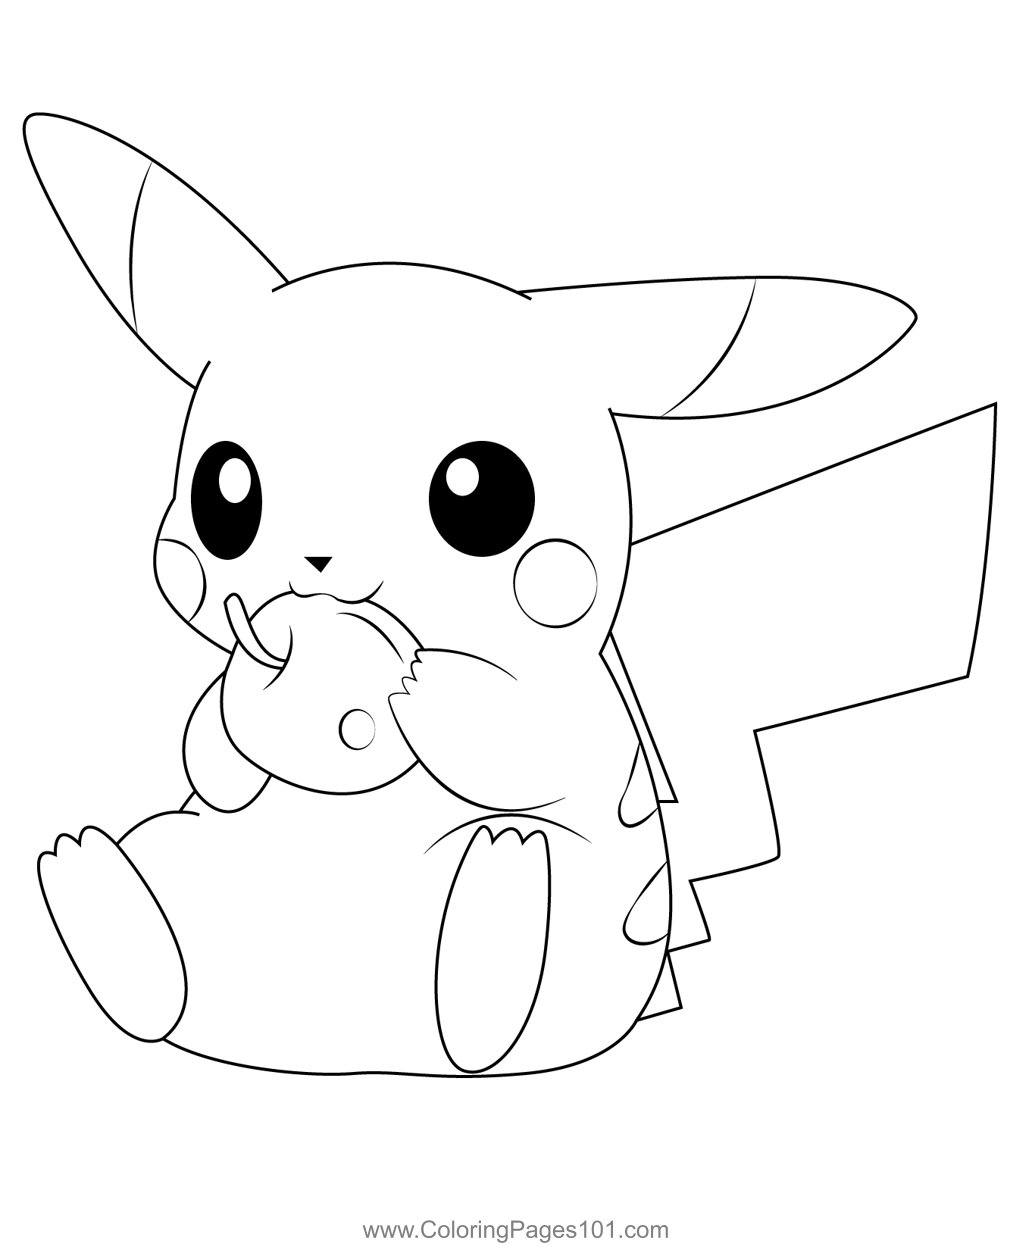 Eating Pikachu